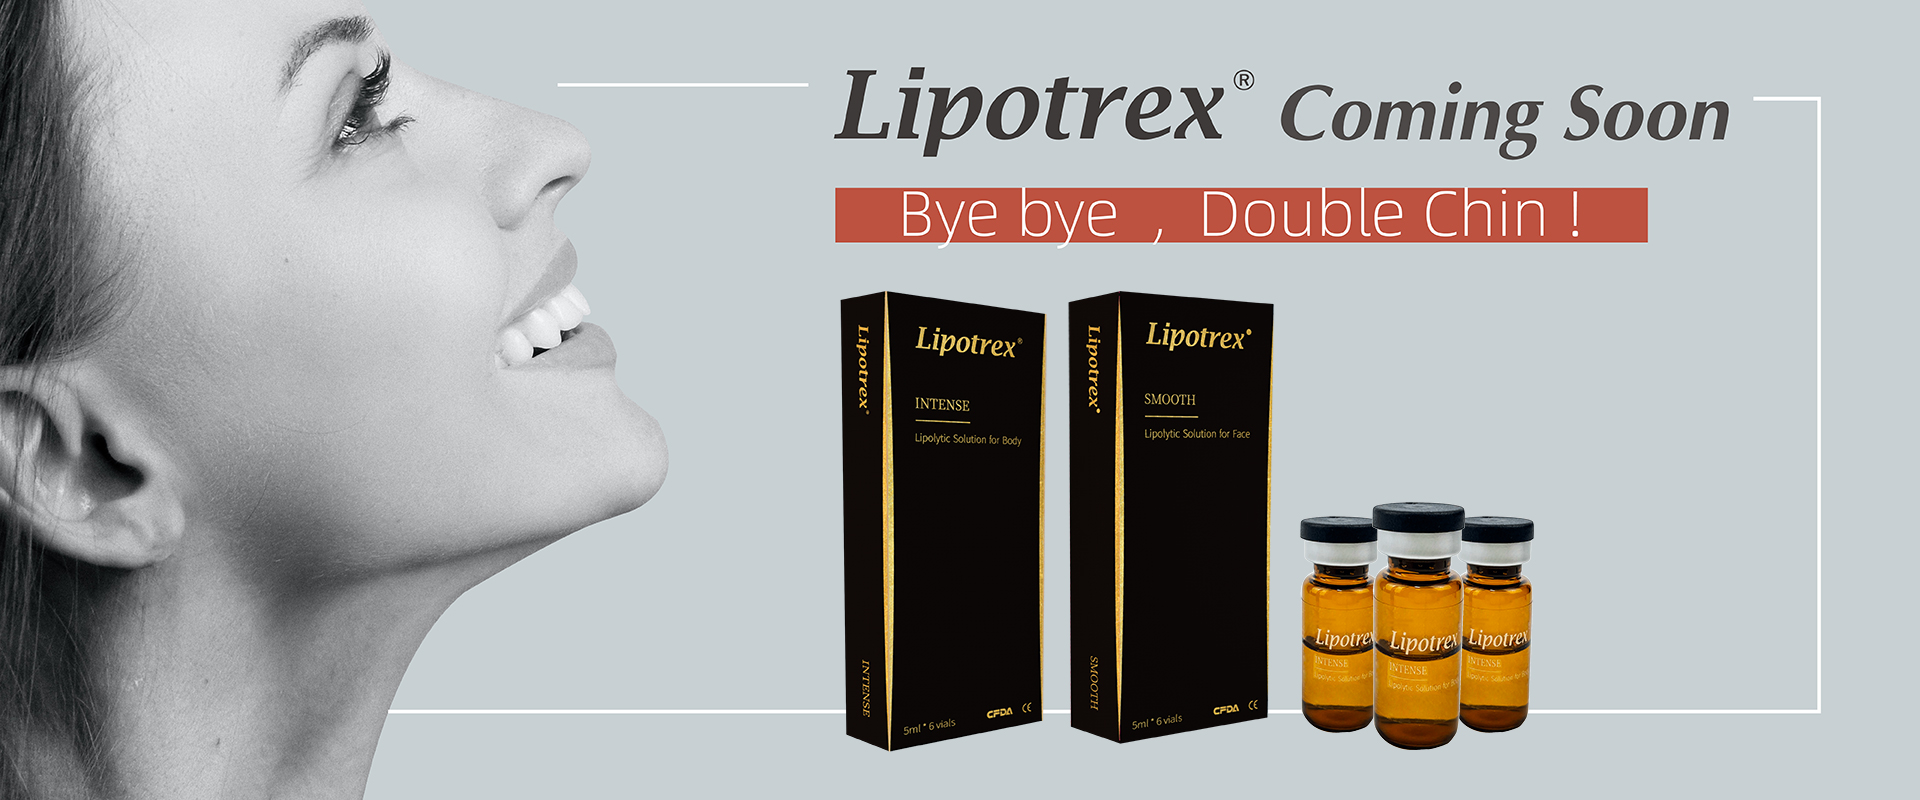 lipotrex coming soon